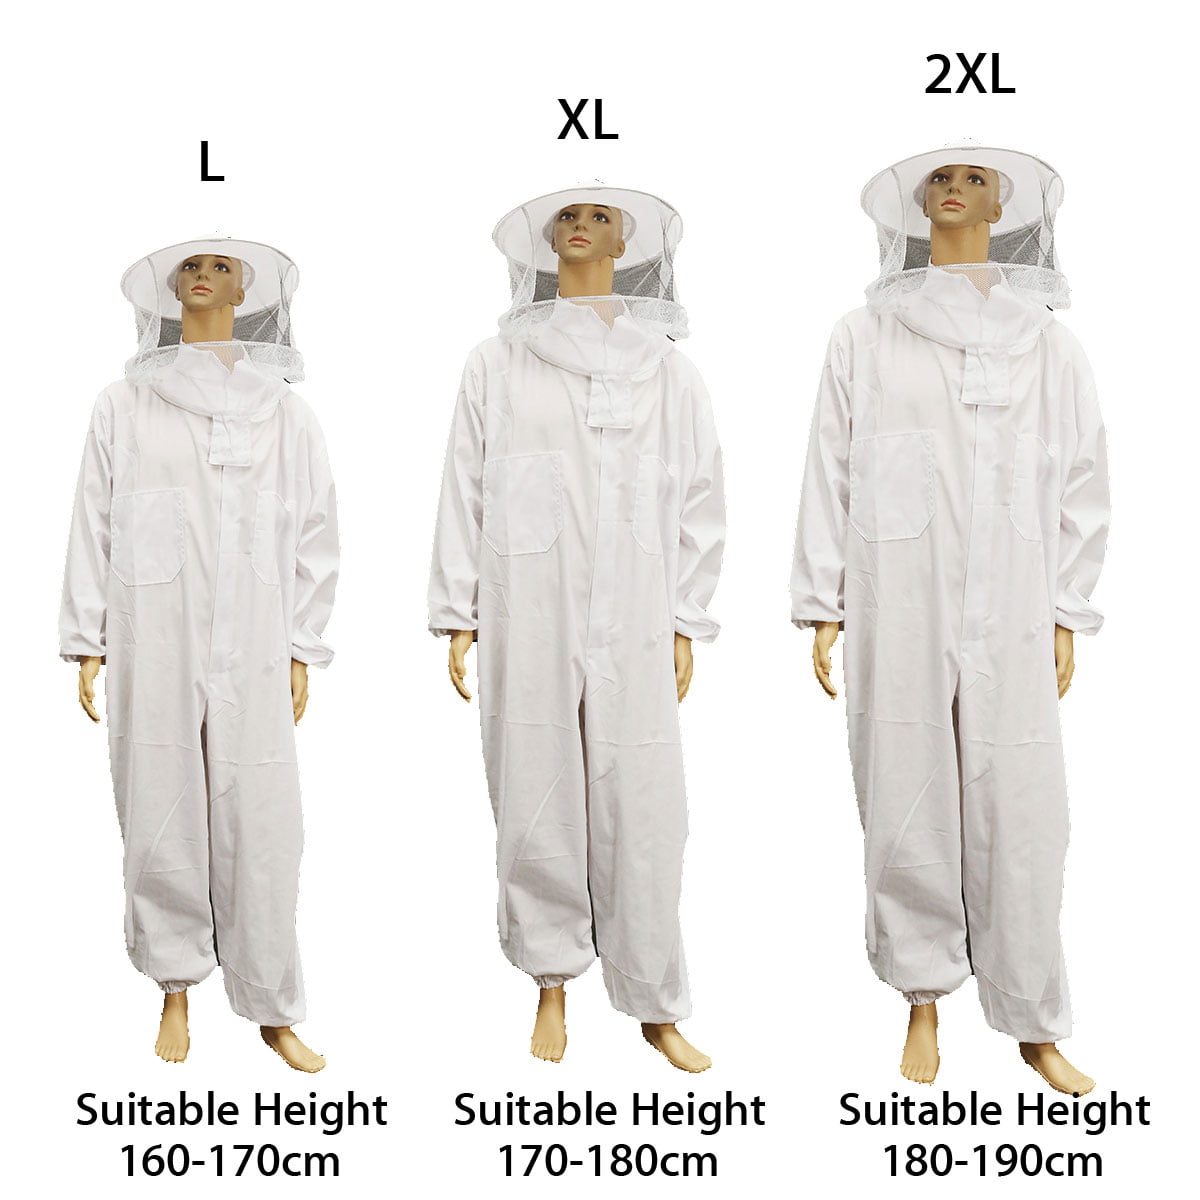 Beekeeping Jacket Premium Beekeeper Pull Over Suit Coat Outfit Kids M White 